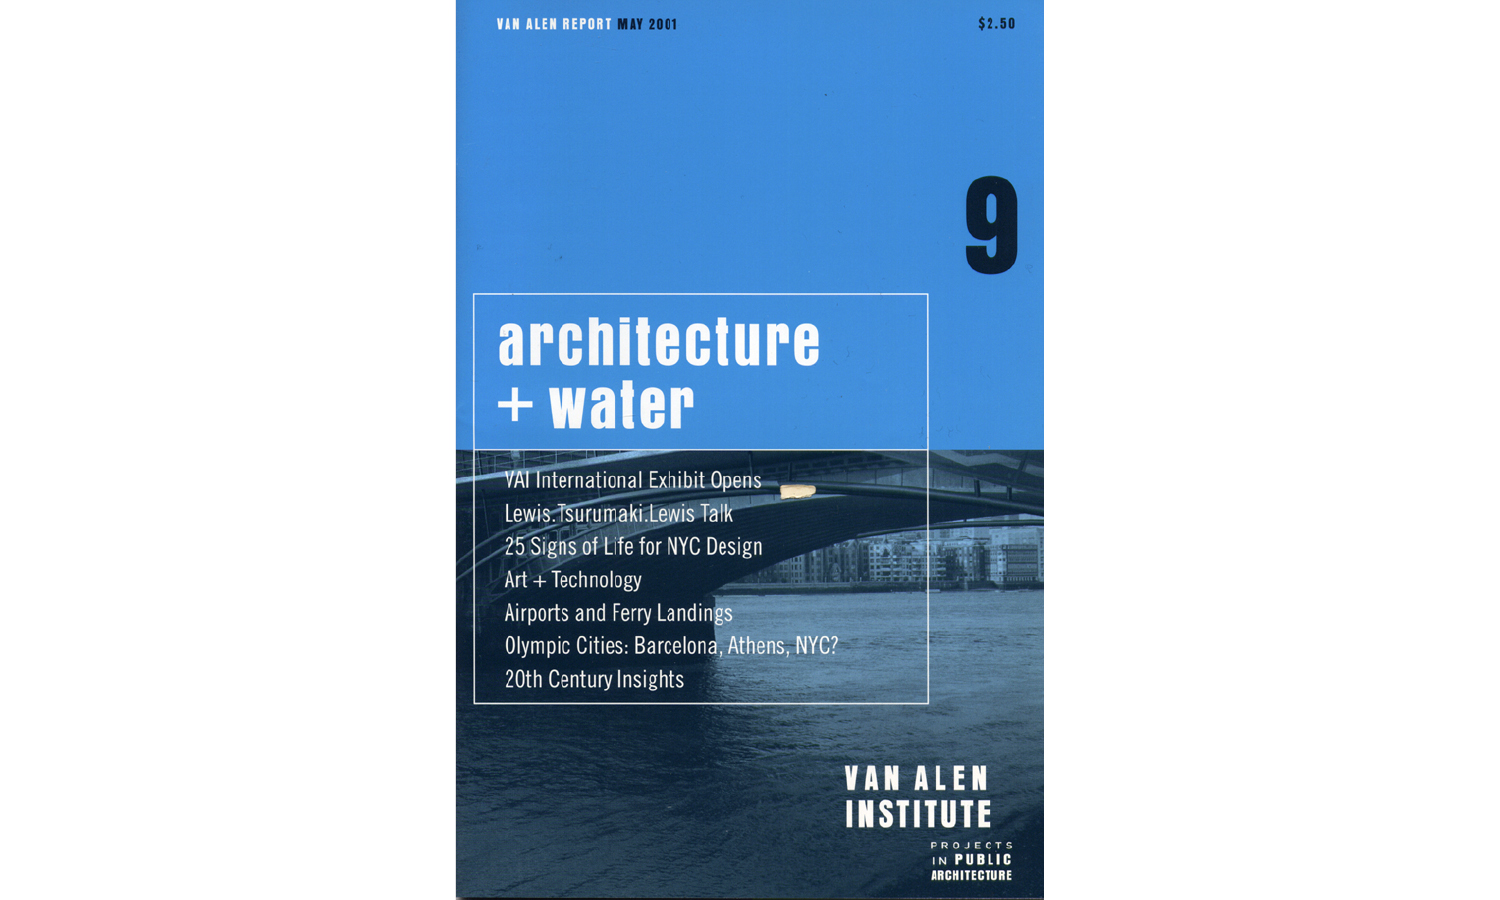 LTL_Architecture + Water_06.jpg